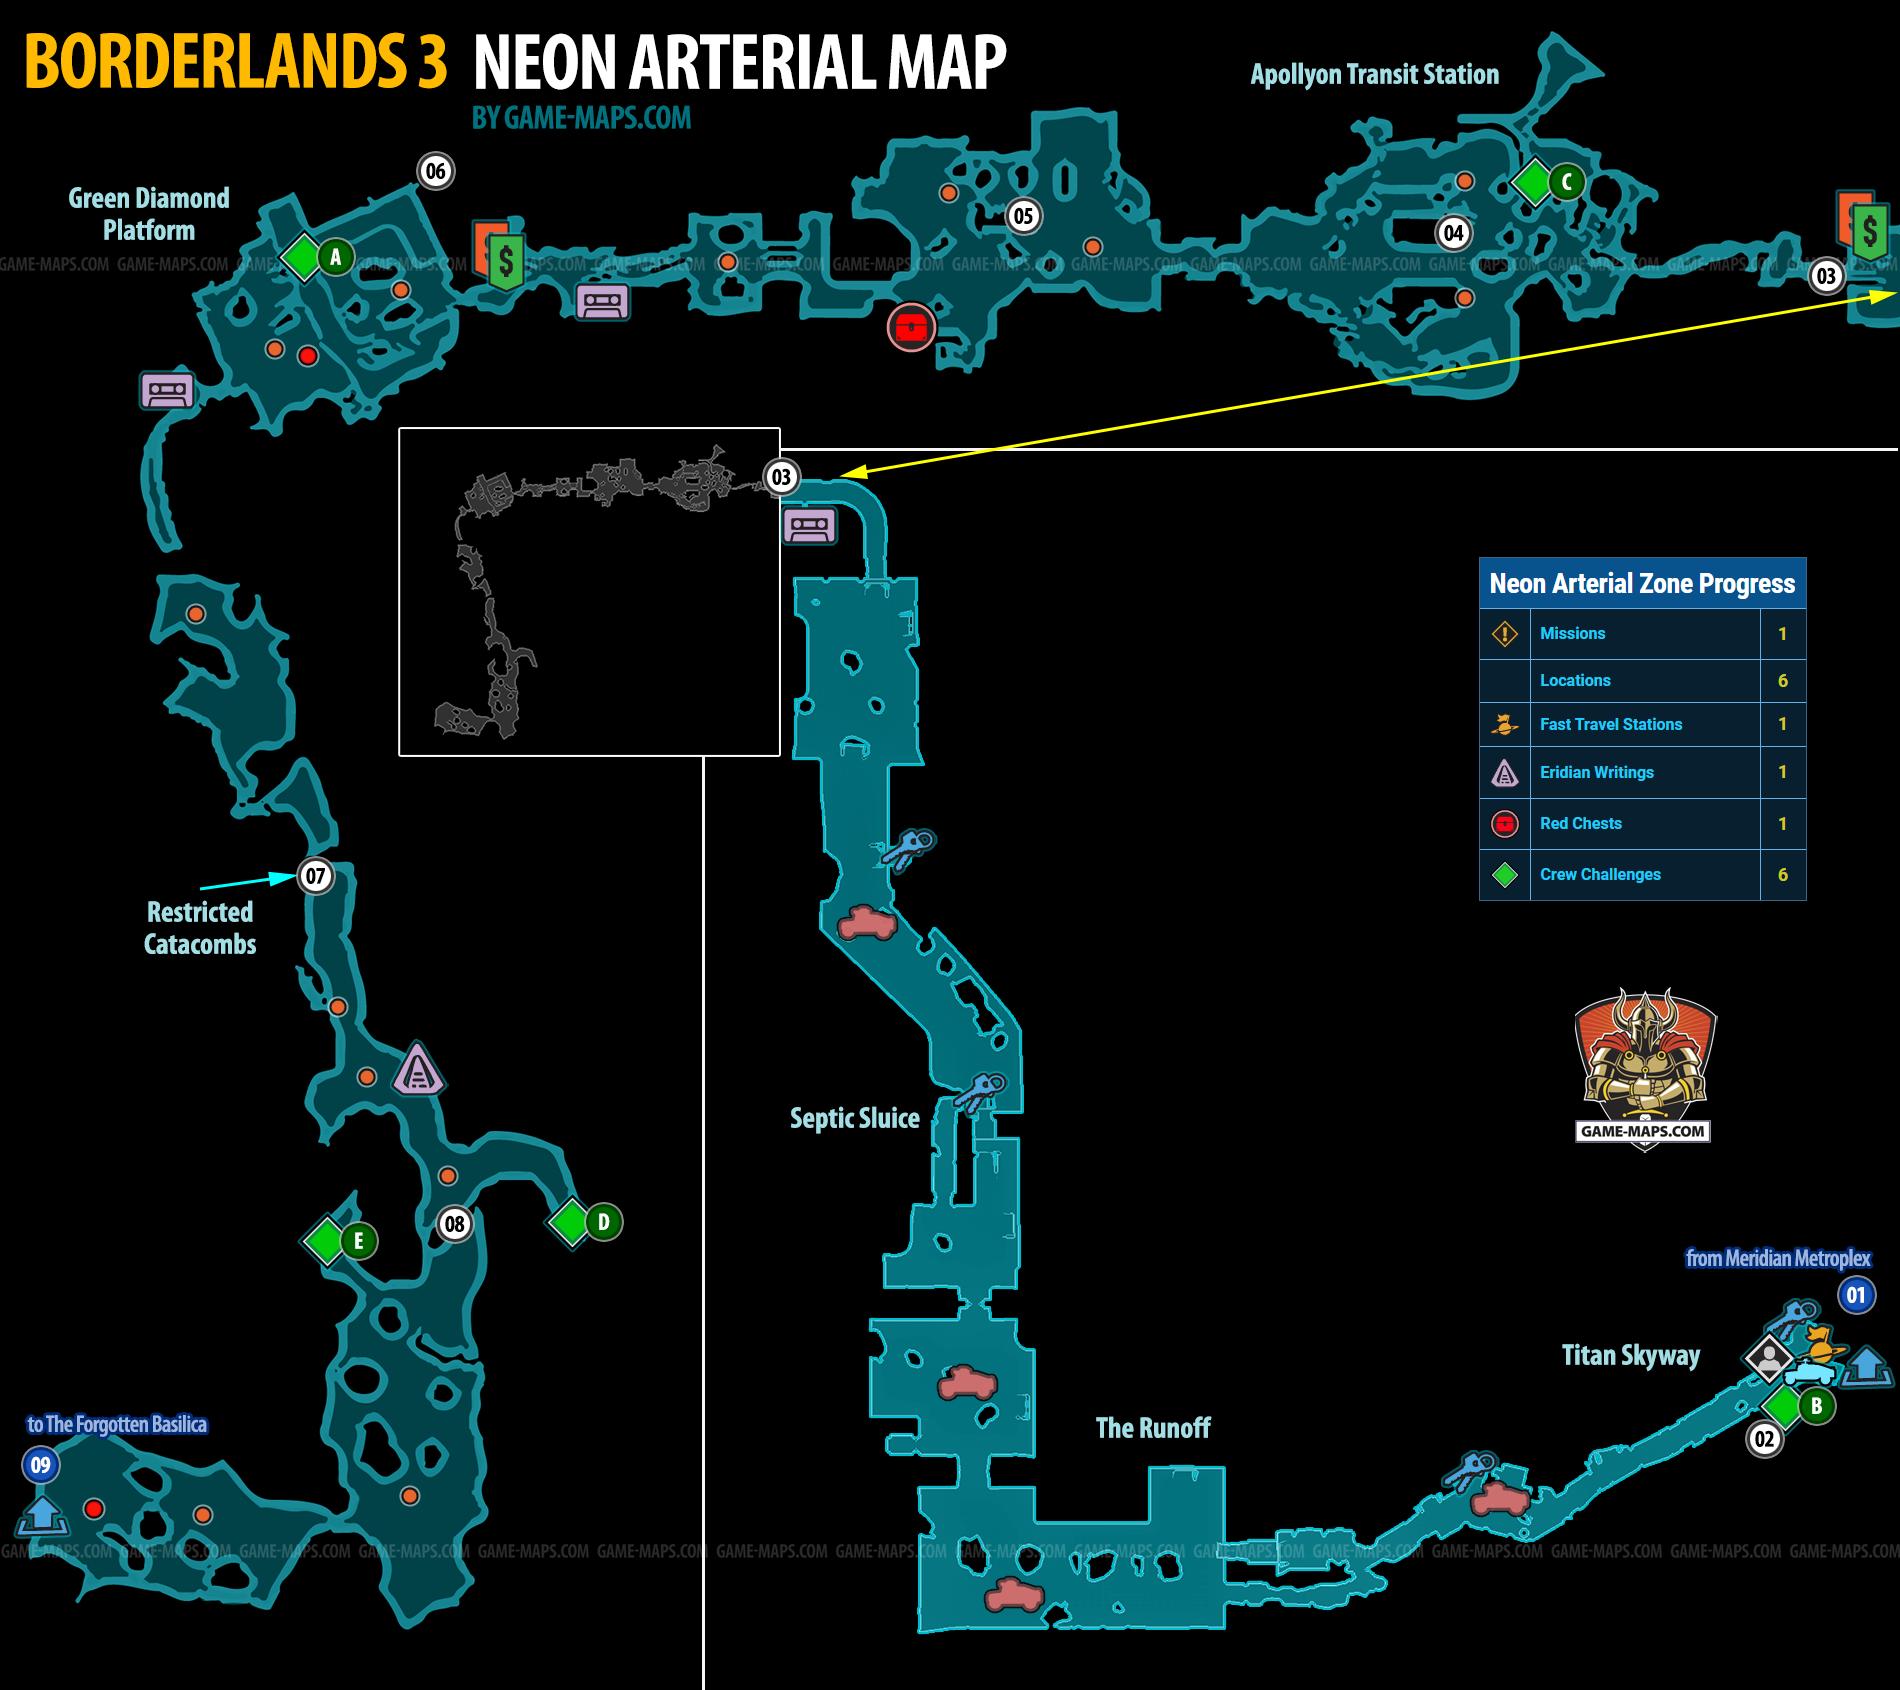 Neon Arterial Map on Promethea Planet for Borderlands 3